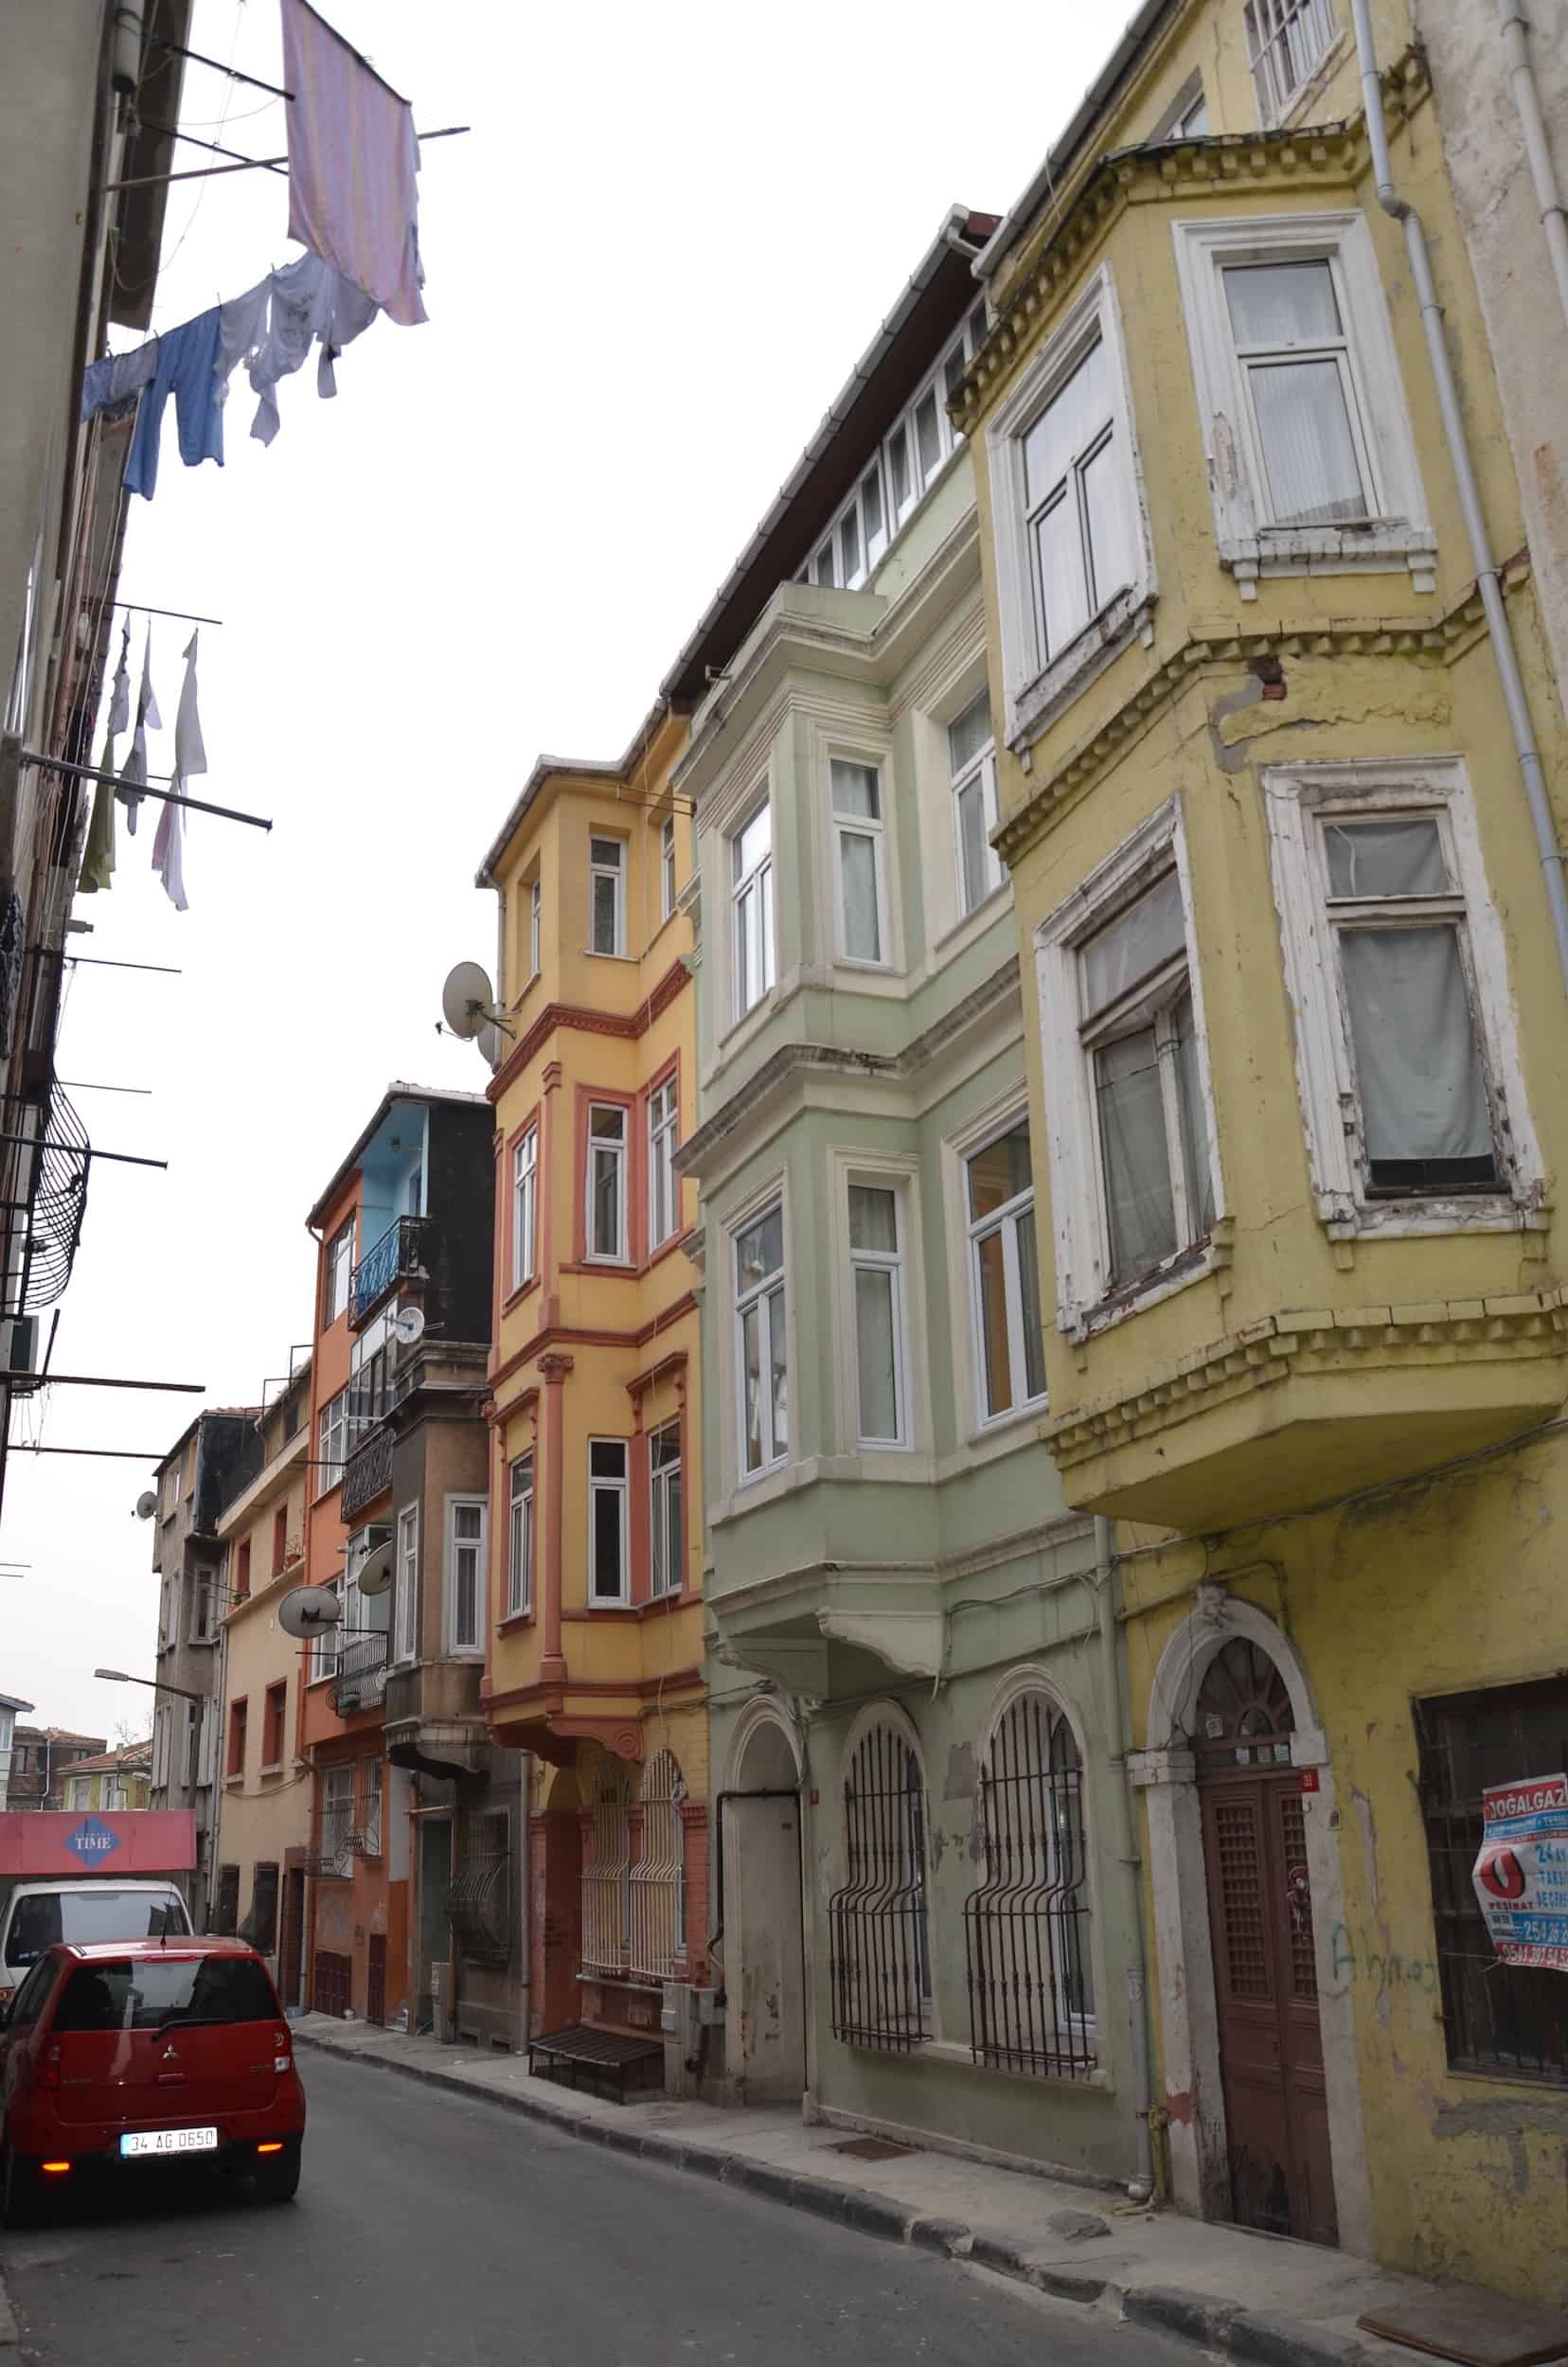 Colorful homes in Tarlabaşı, Istanbul, Turkey